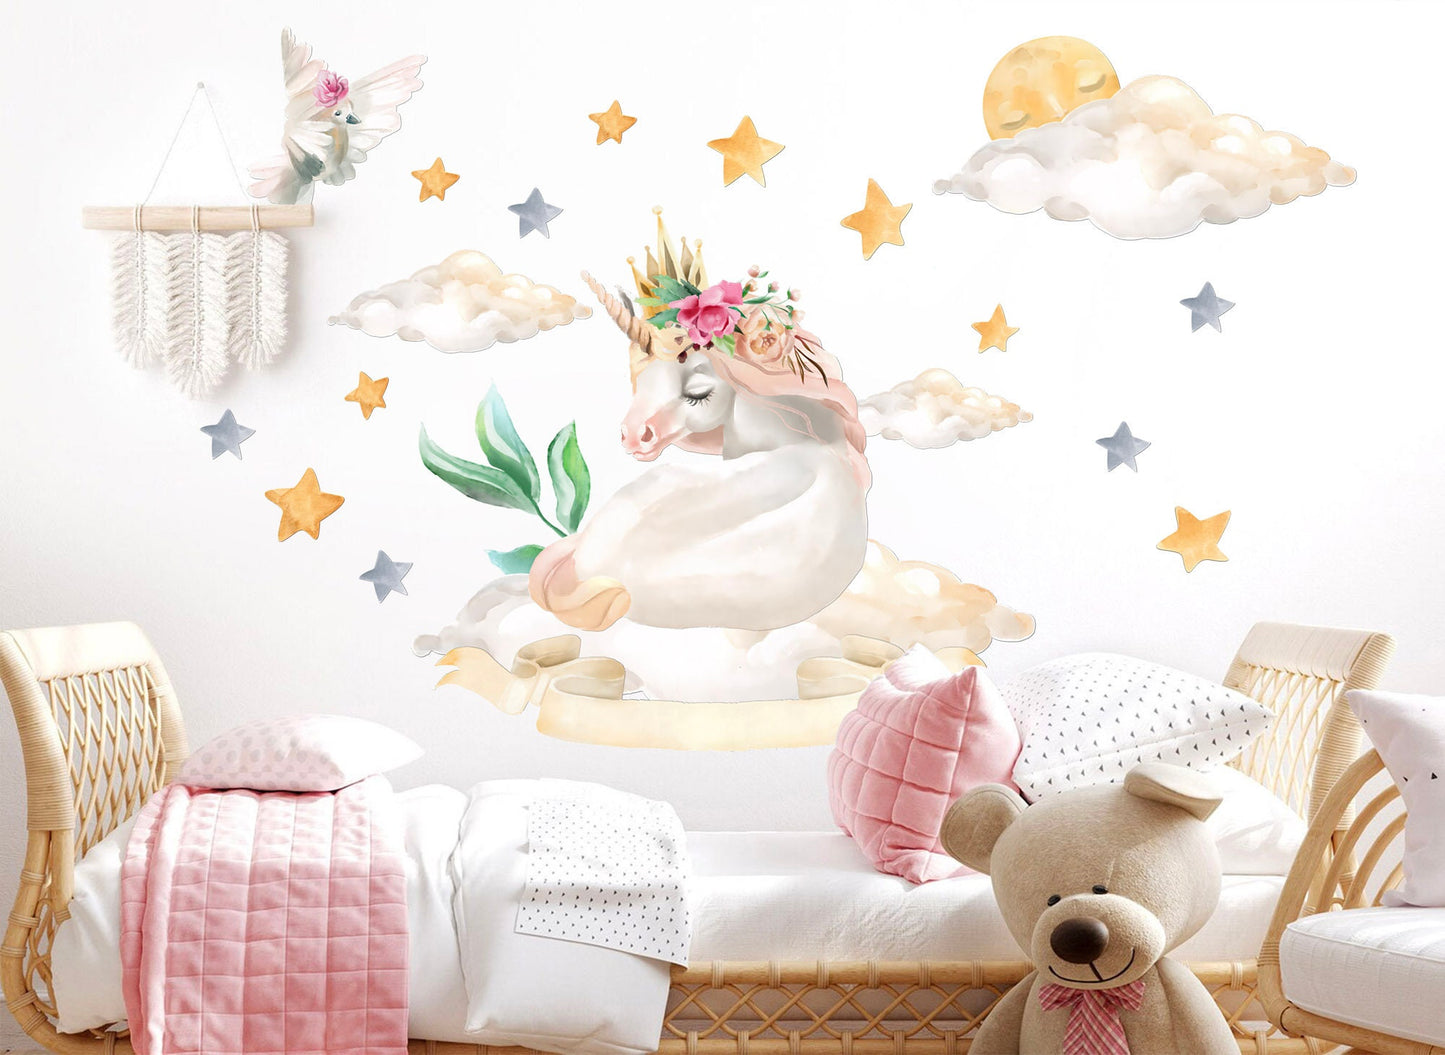 Slumbering Enchanted Unicorn on Cloud Wall Decal - Starry Sky Moon - Girl Room Decor - BR112